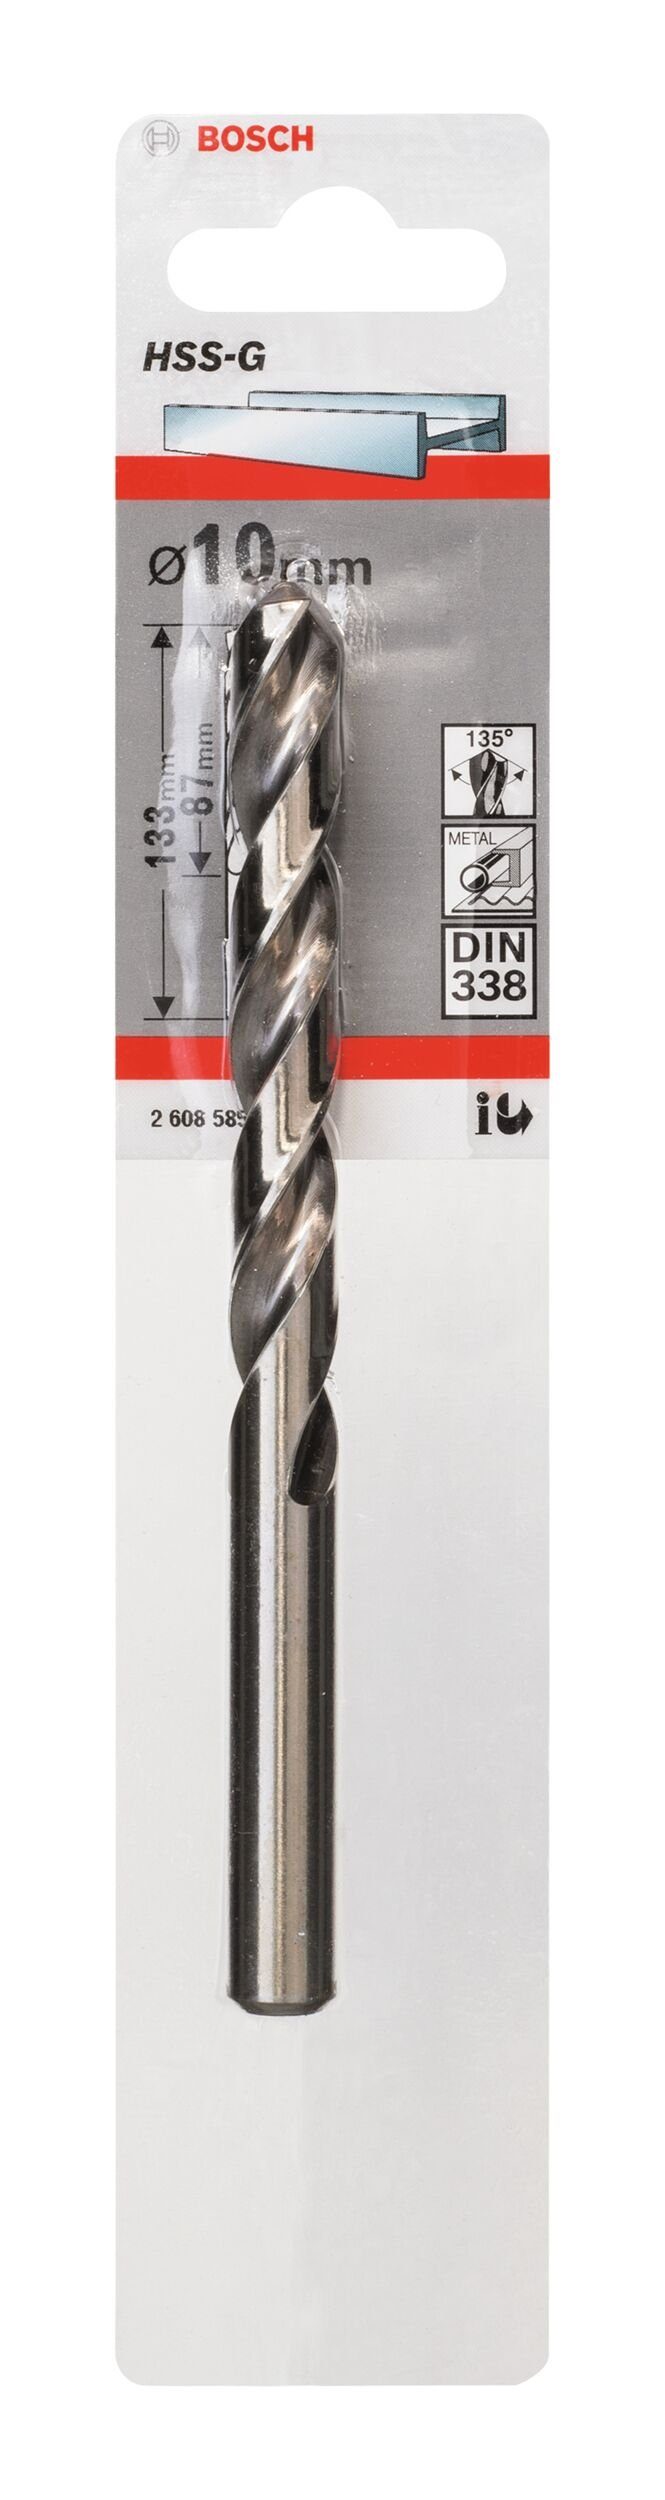 10 (DIN 338) x mm Metallbohrer, HSS-G 1er-Pack - 87 x - BOSCH 133